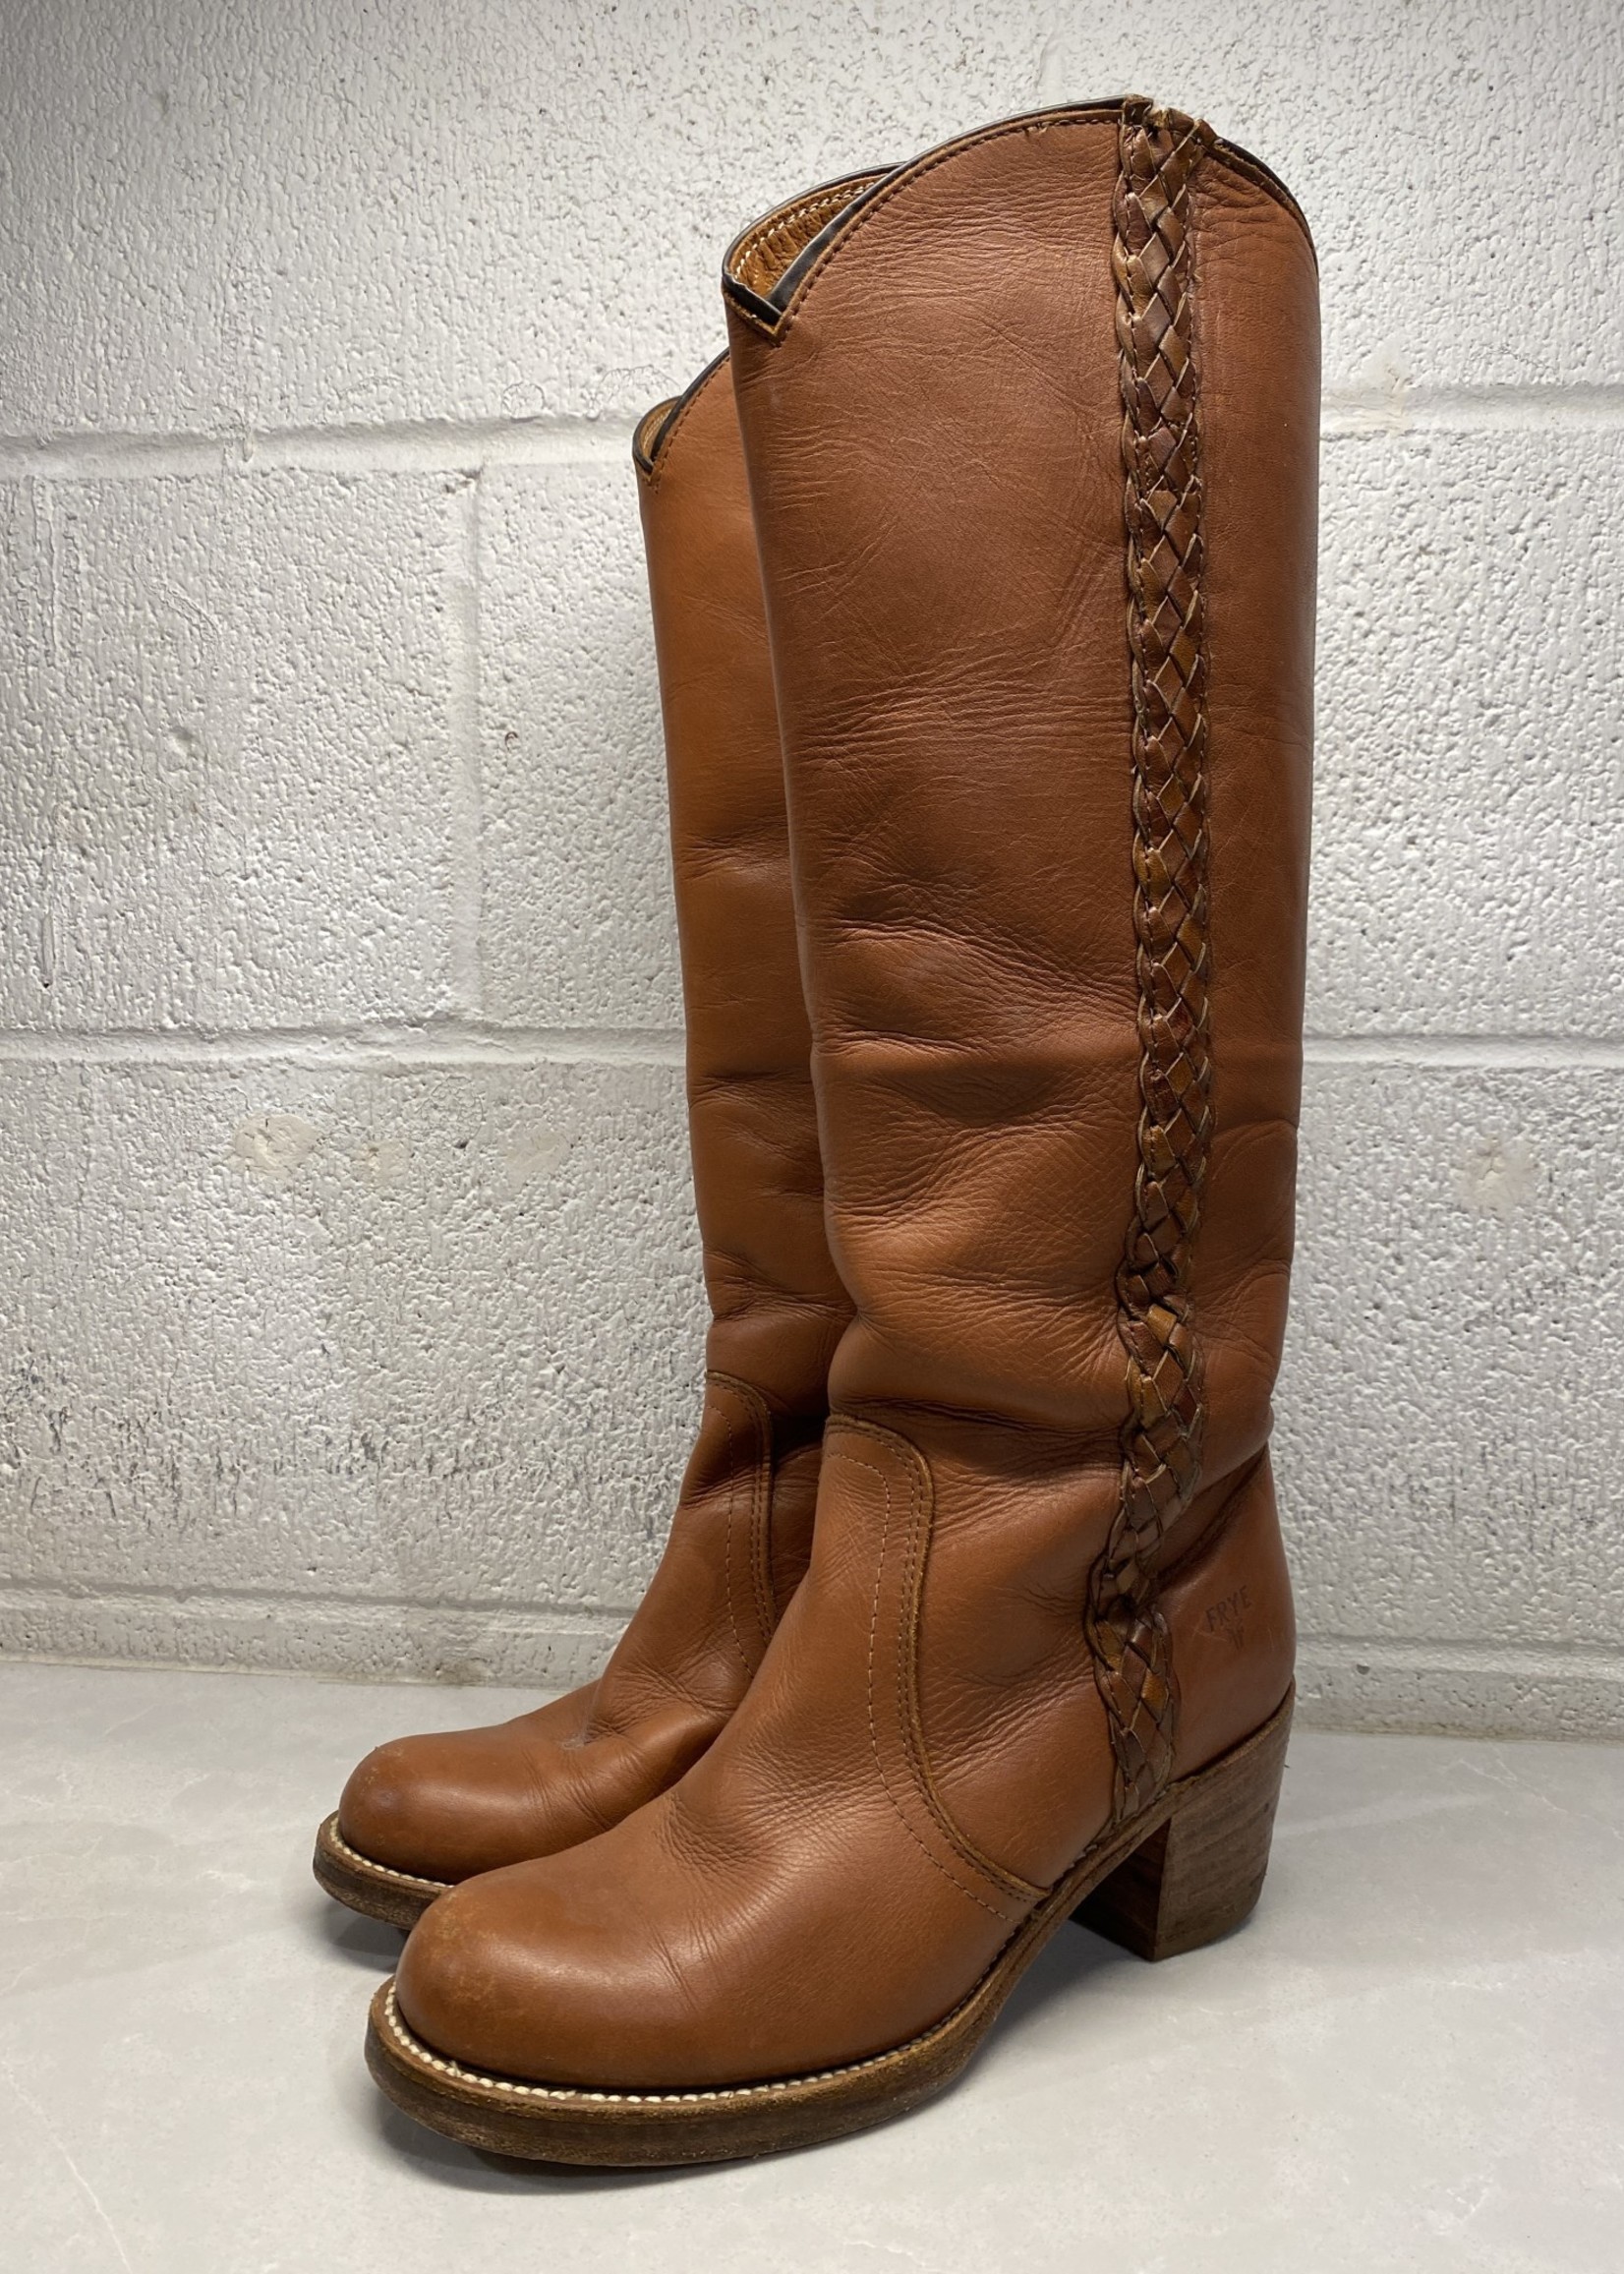 Frye Knee High Brown Boots 6.5